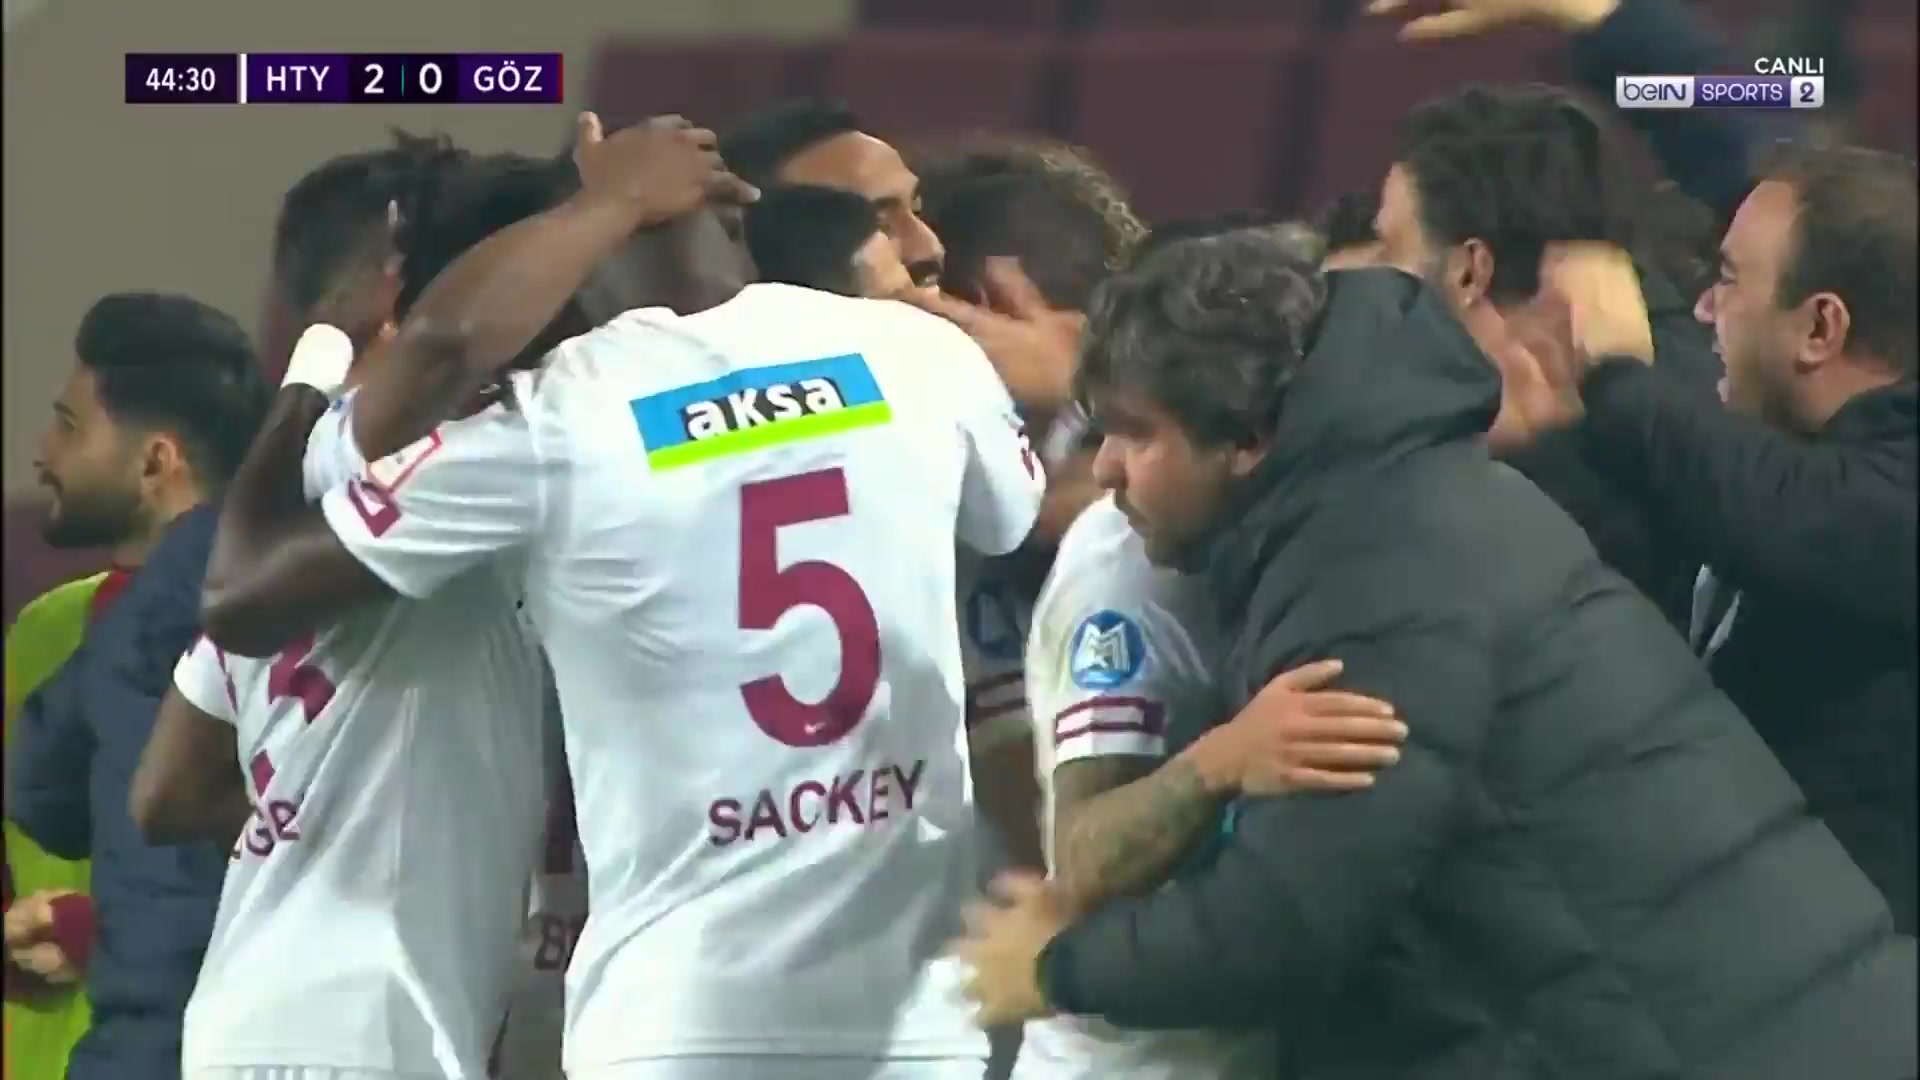 TUR D1 Hatayspor Vs Goztepe Ayoub El Kaabi Goal in 44 min, Score 2:0